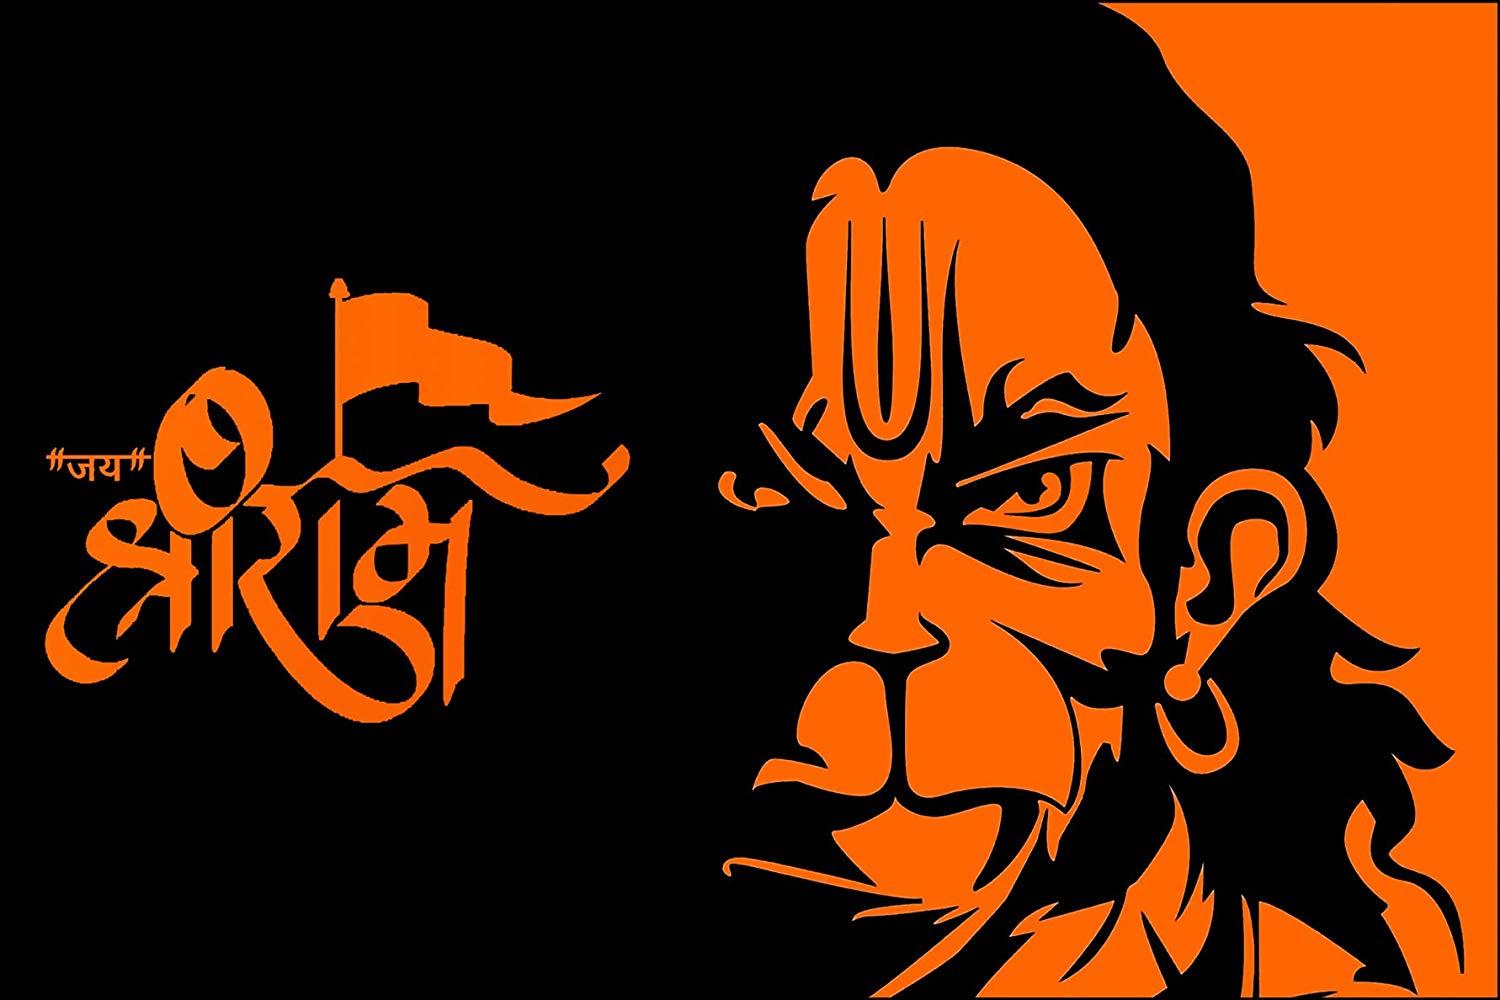 Hanuman ji icon vector vectors hi-res stock photography and images - Alamy